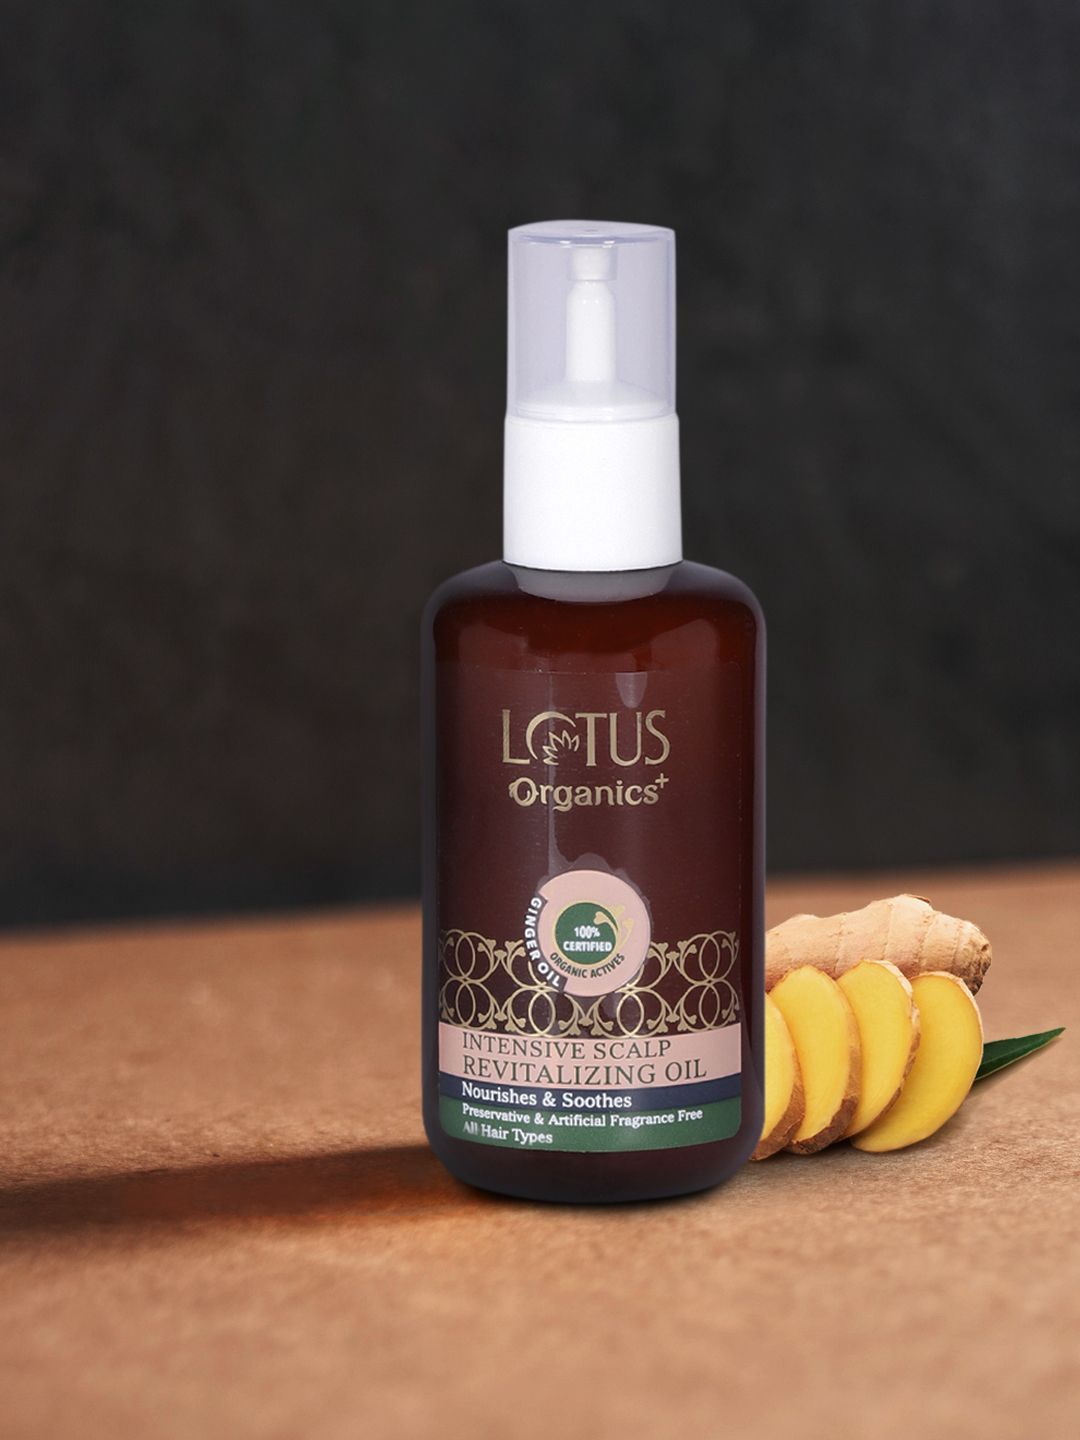 Lotus Organics Intensive Scalp Revitalizing Ginger Oil 100 ml Price in India